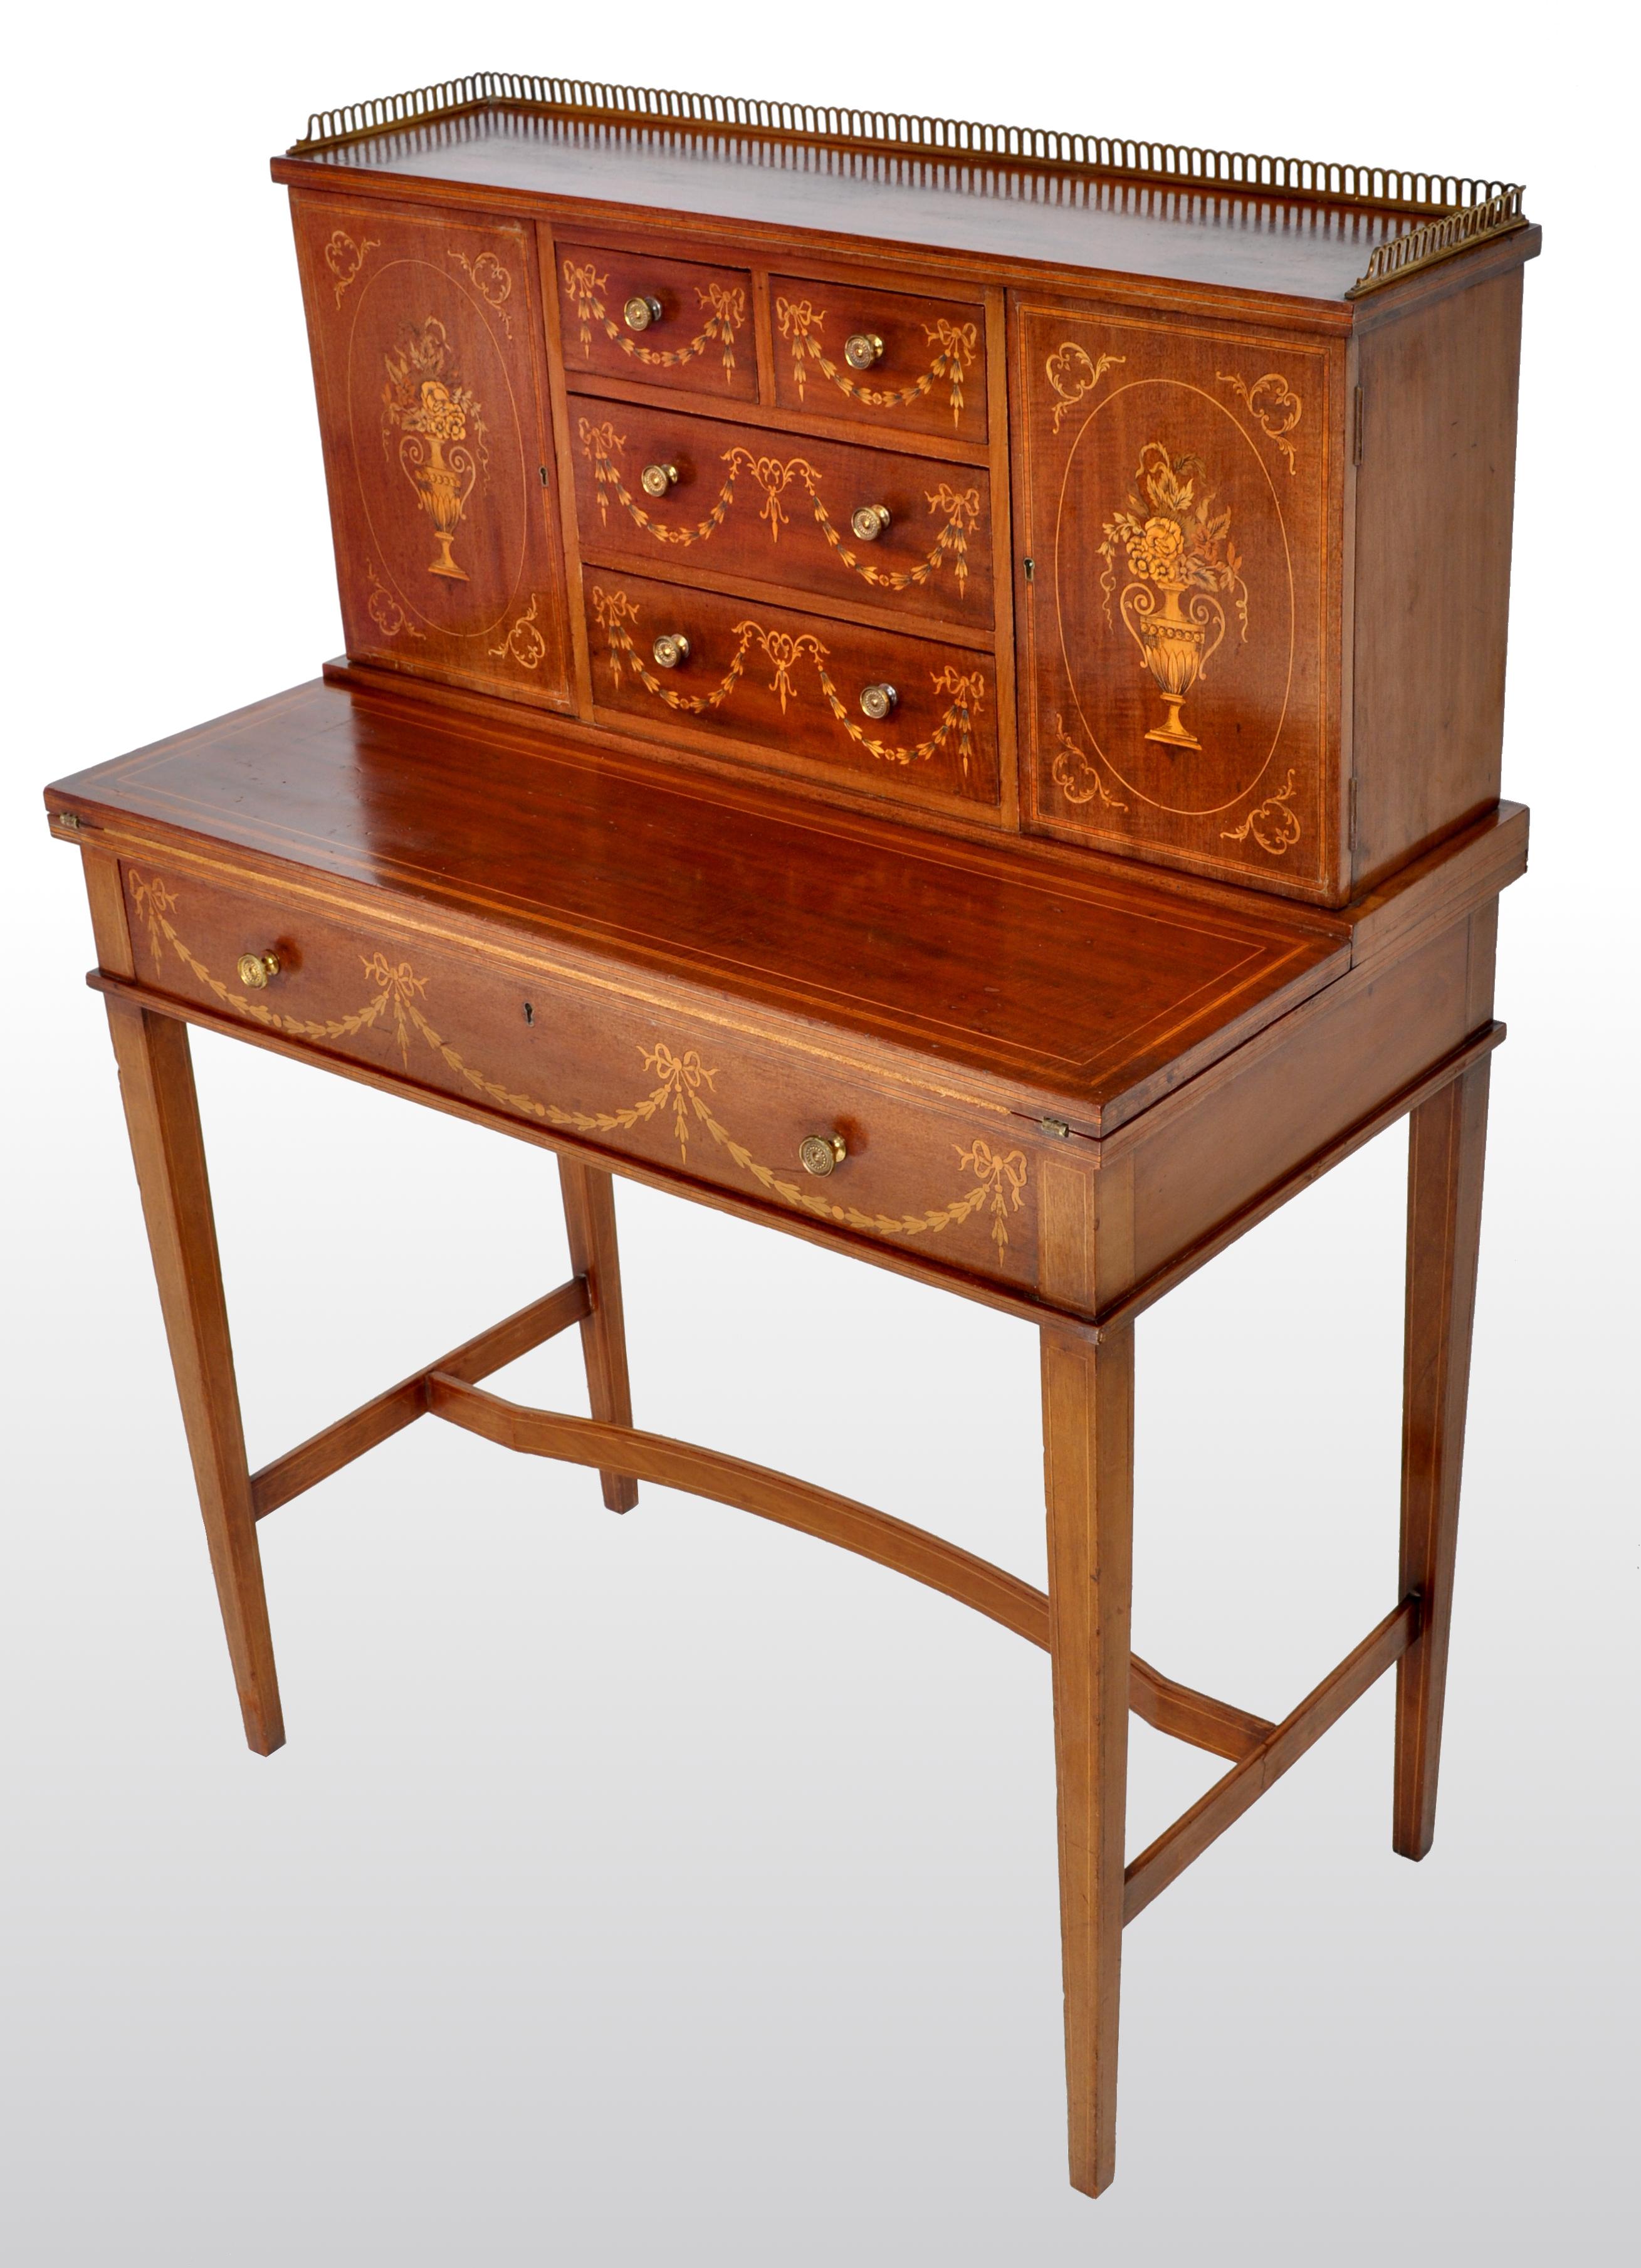 Antique Sheraton Revival Inlaid Mahogany Desk / Writing Table, circa 1895 9